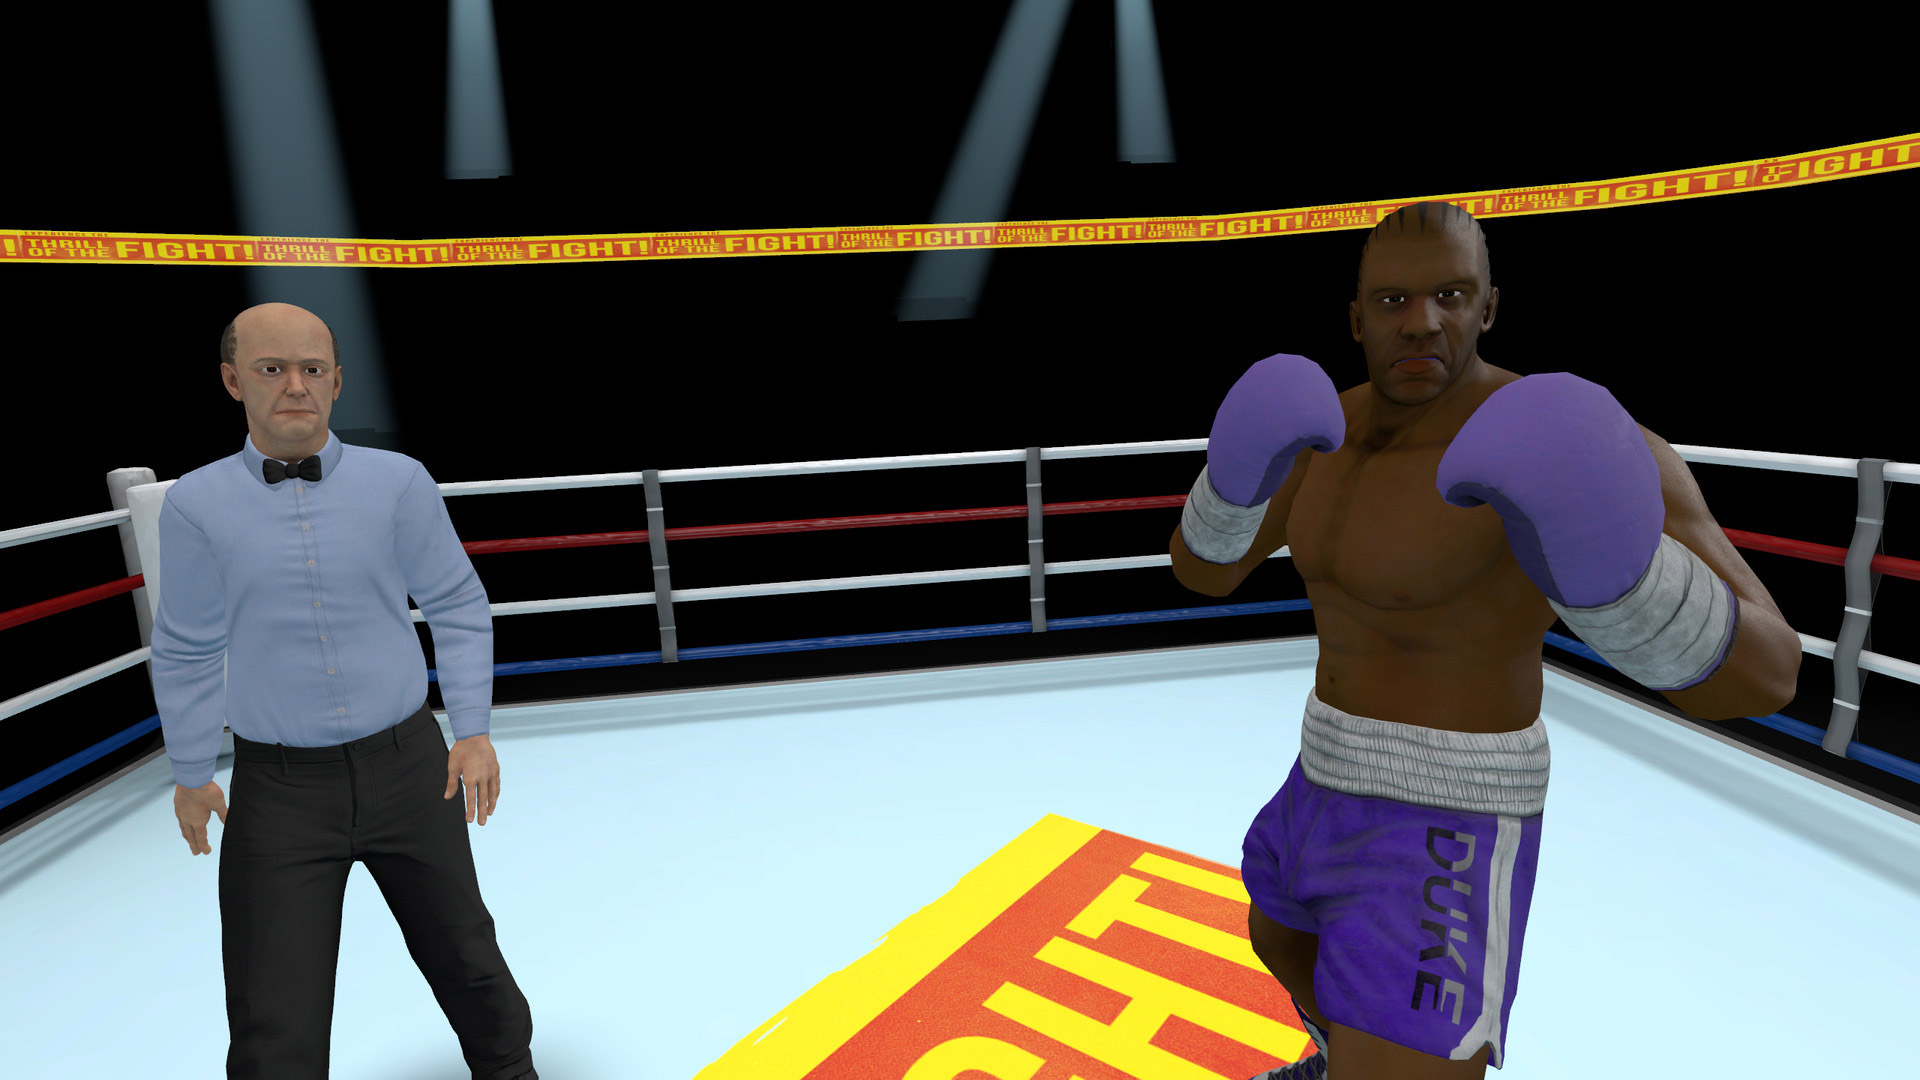 Thrill of the Fight gameplay screenshot.